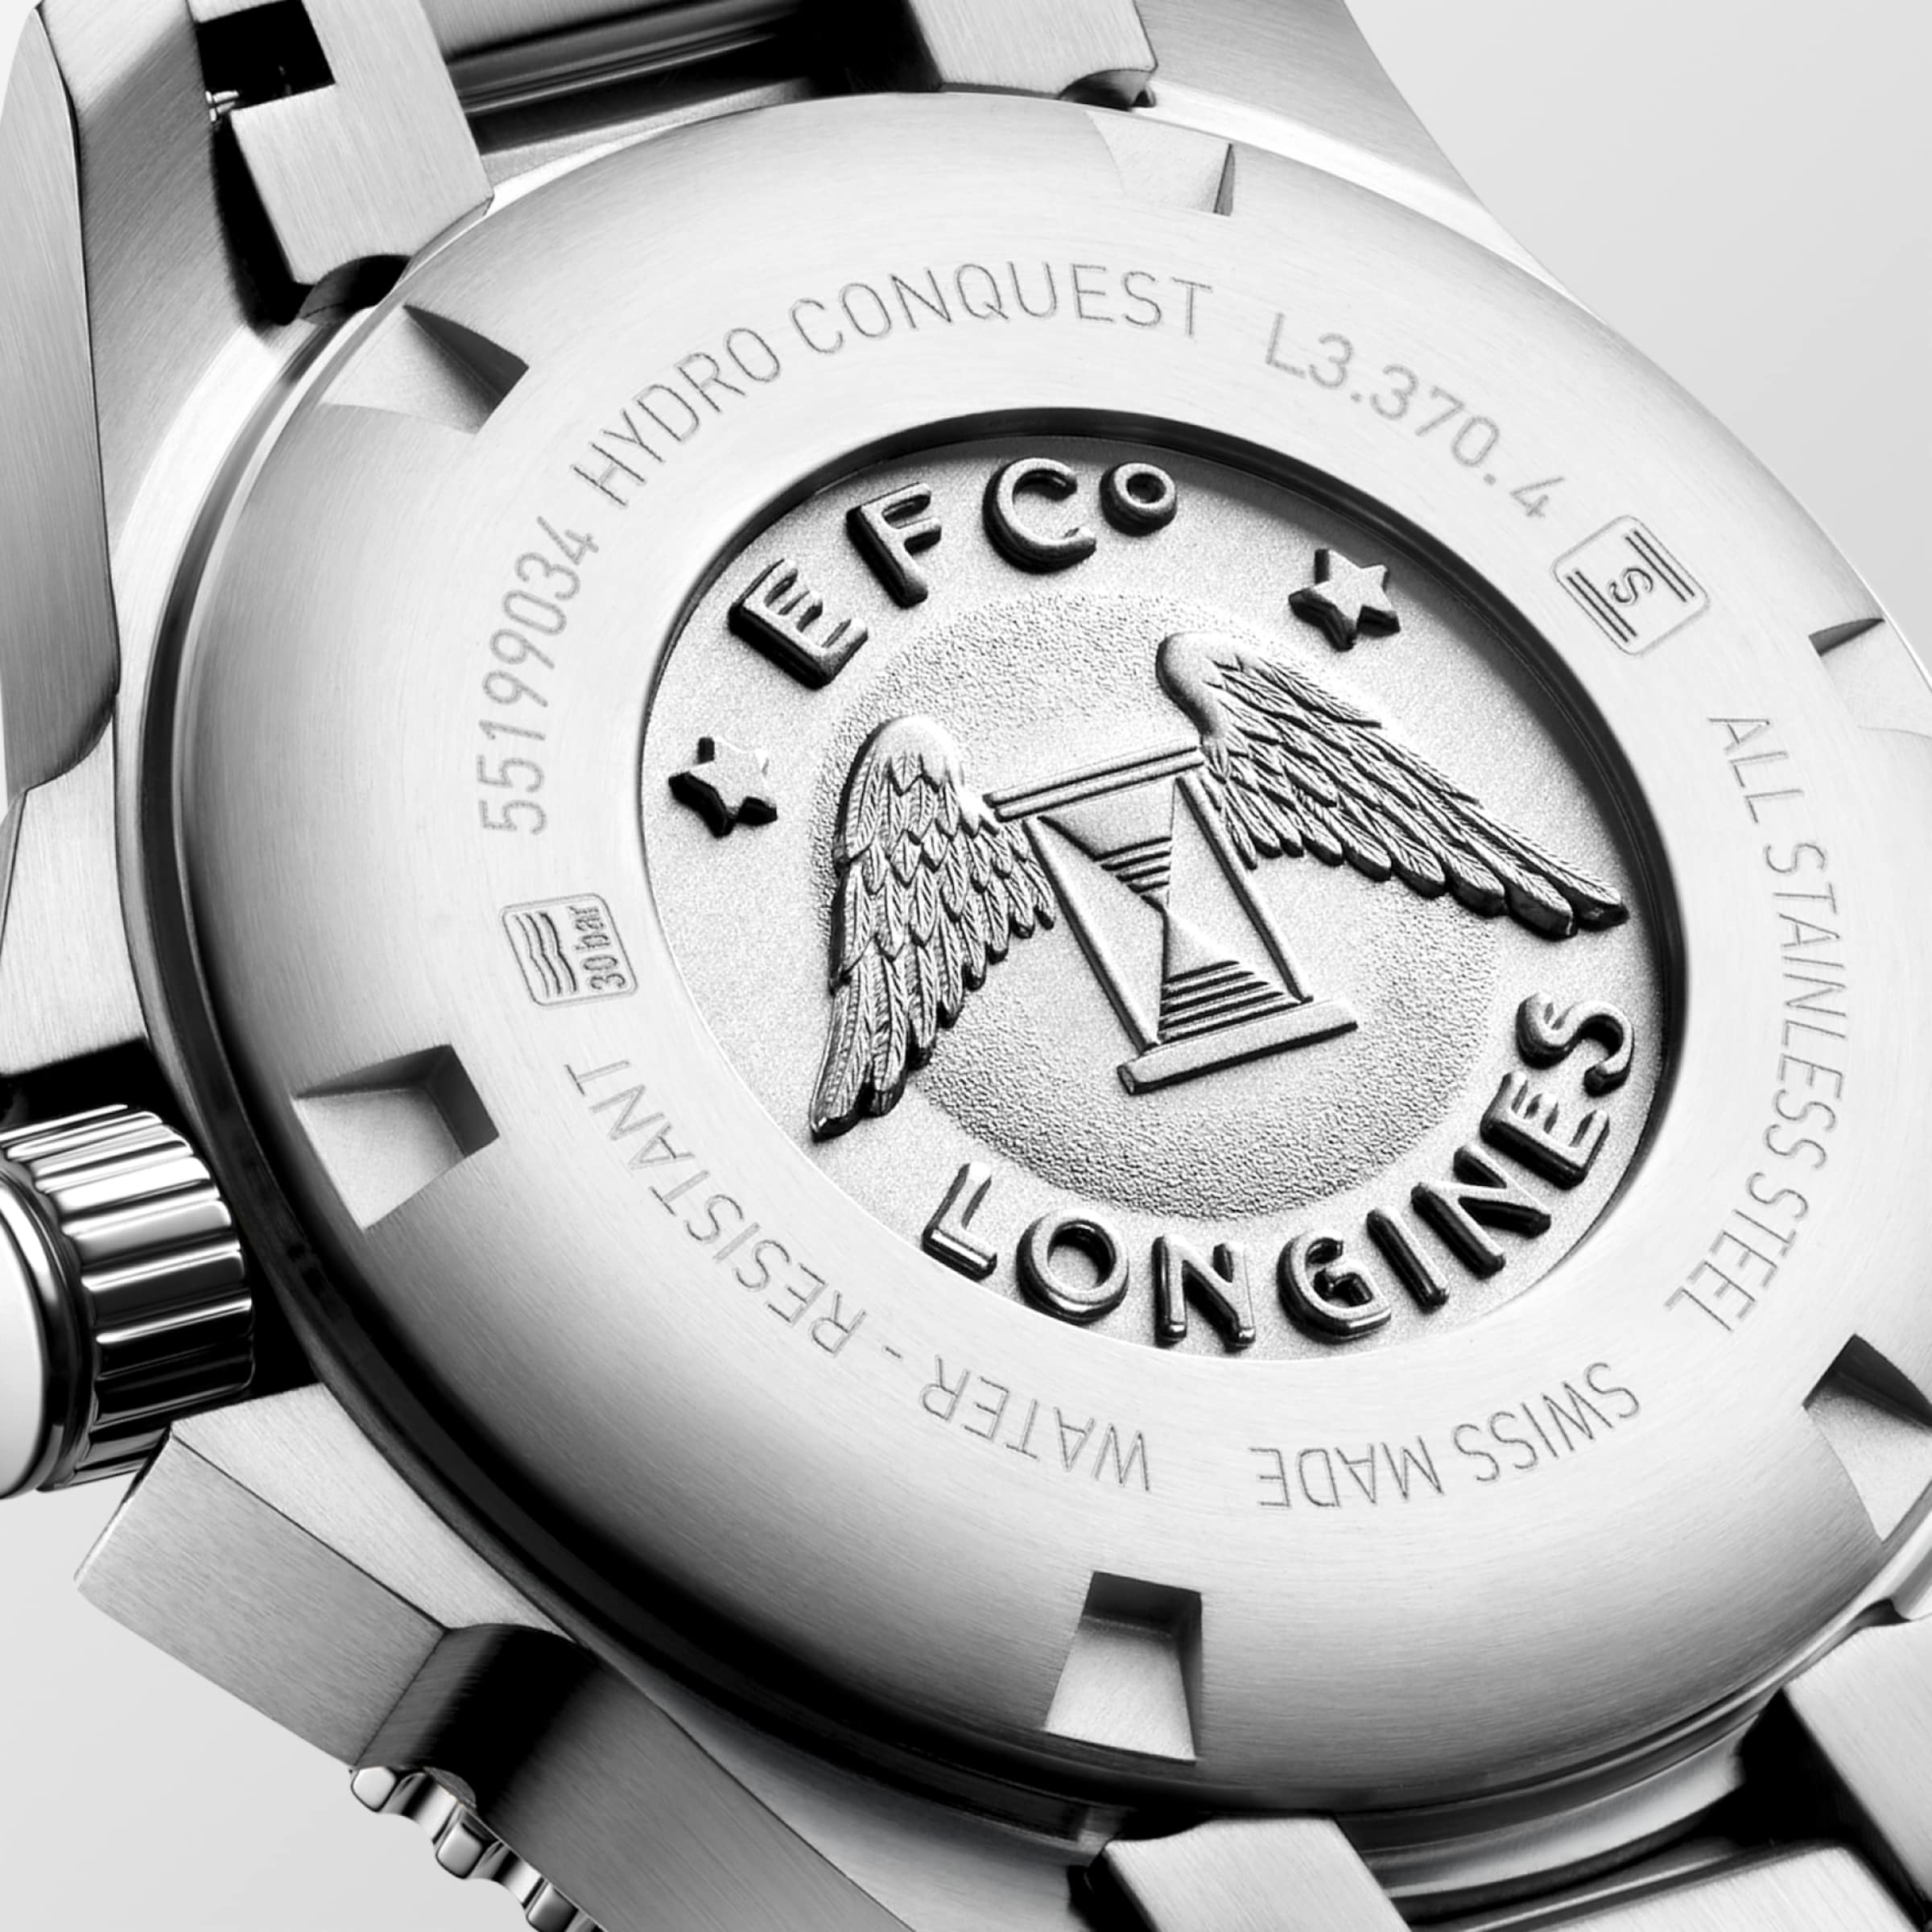 Longines HYDROCONQUEST Quartz Stainless steel and ceramic bezel Watch - L3.370.4.96.6